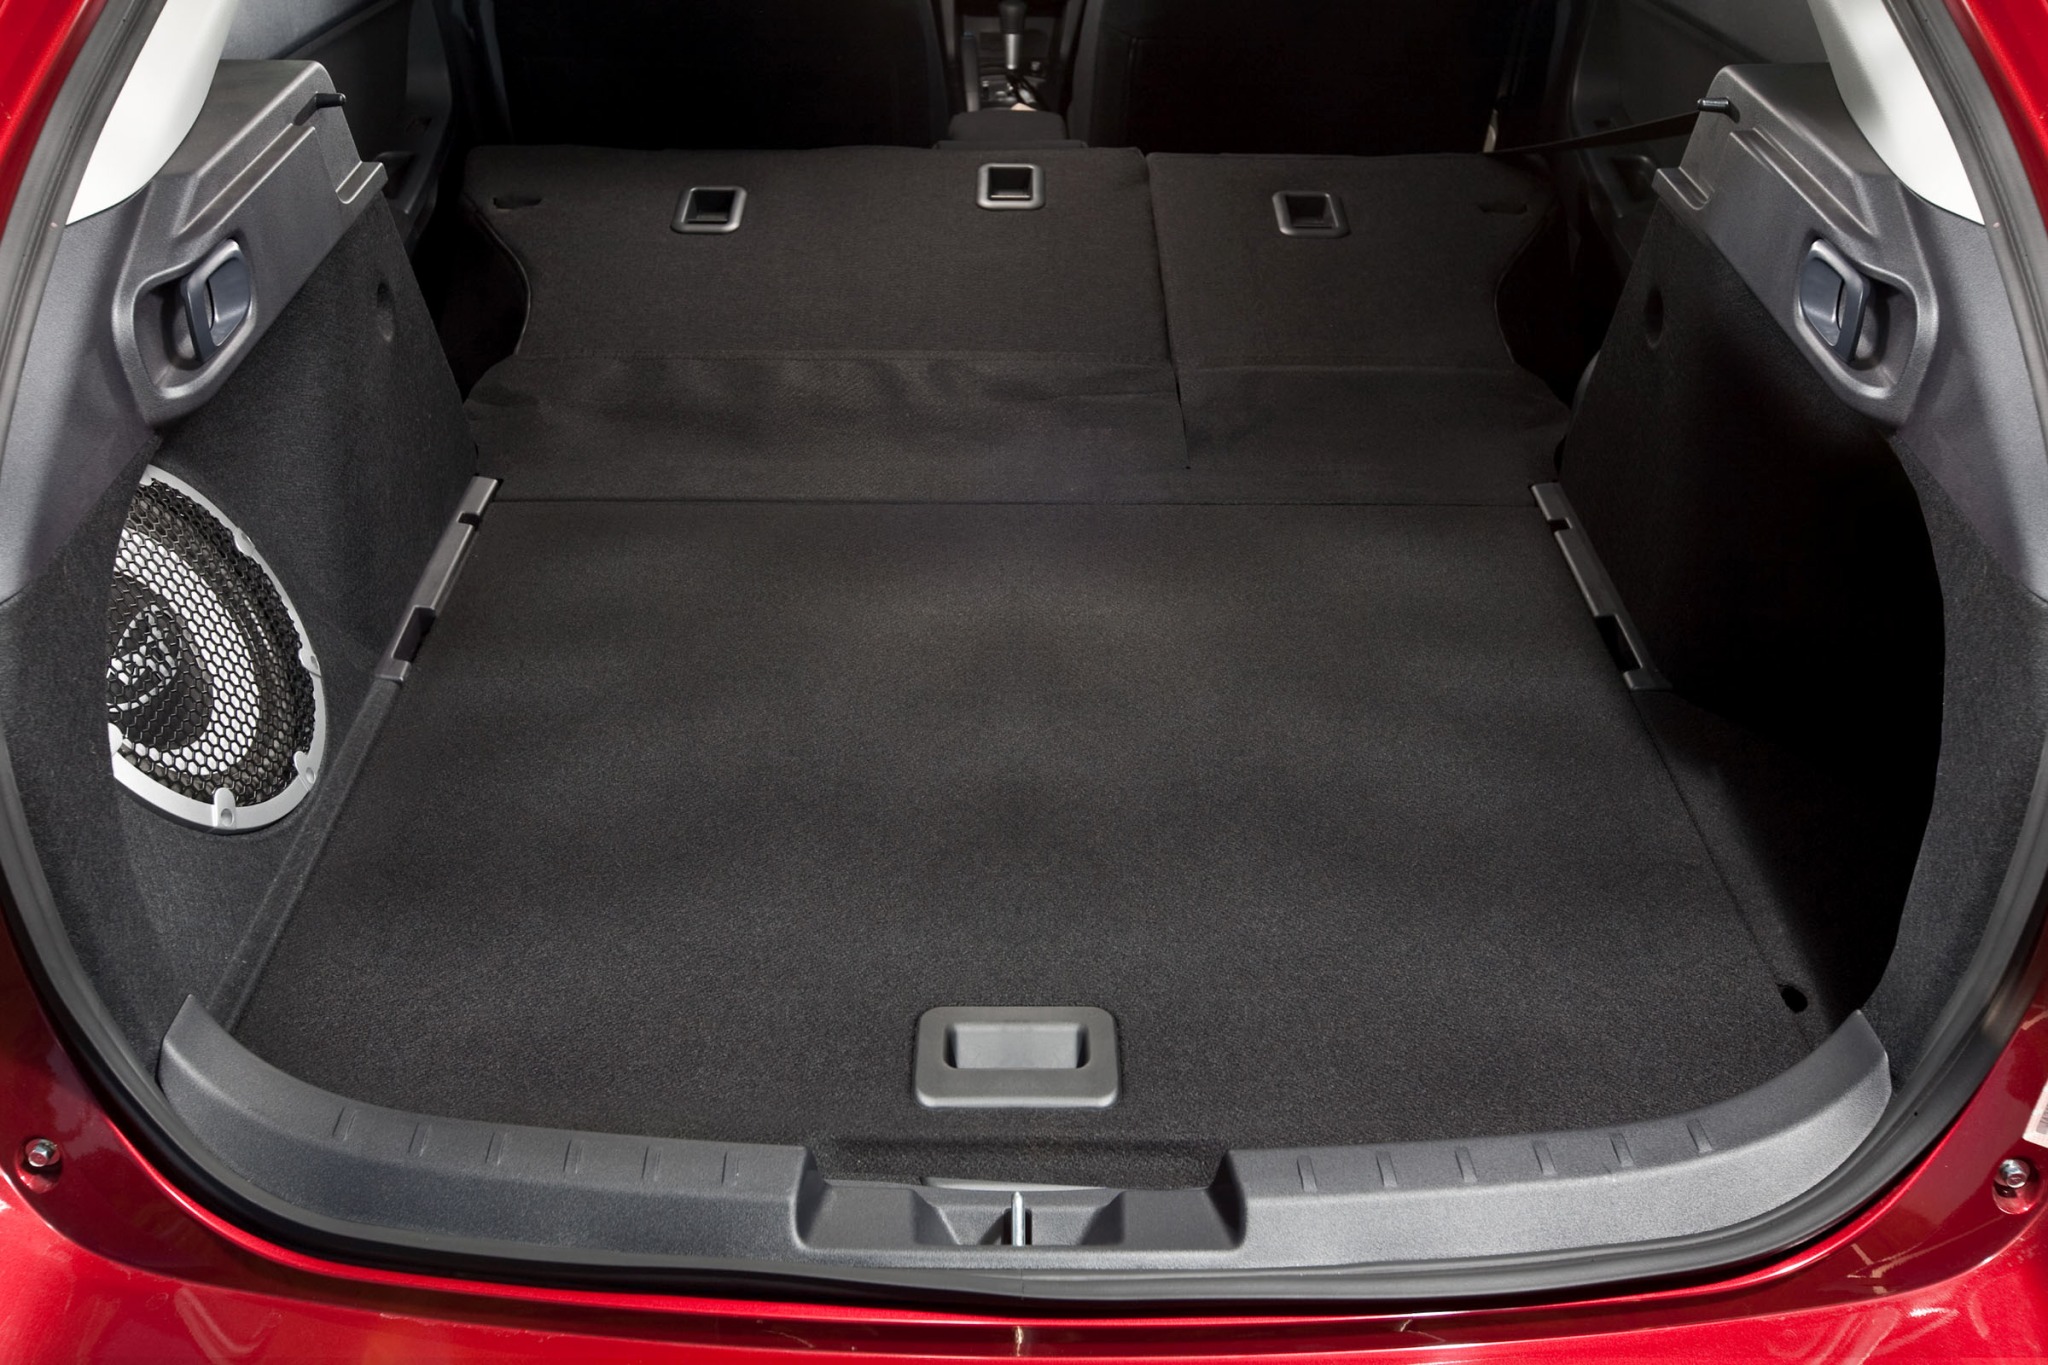 2014 Mitsubishi Lancer Sp interior #7